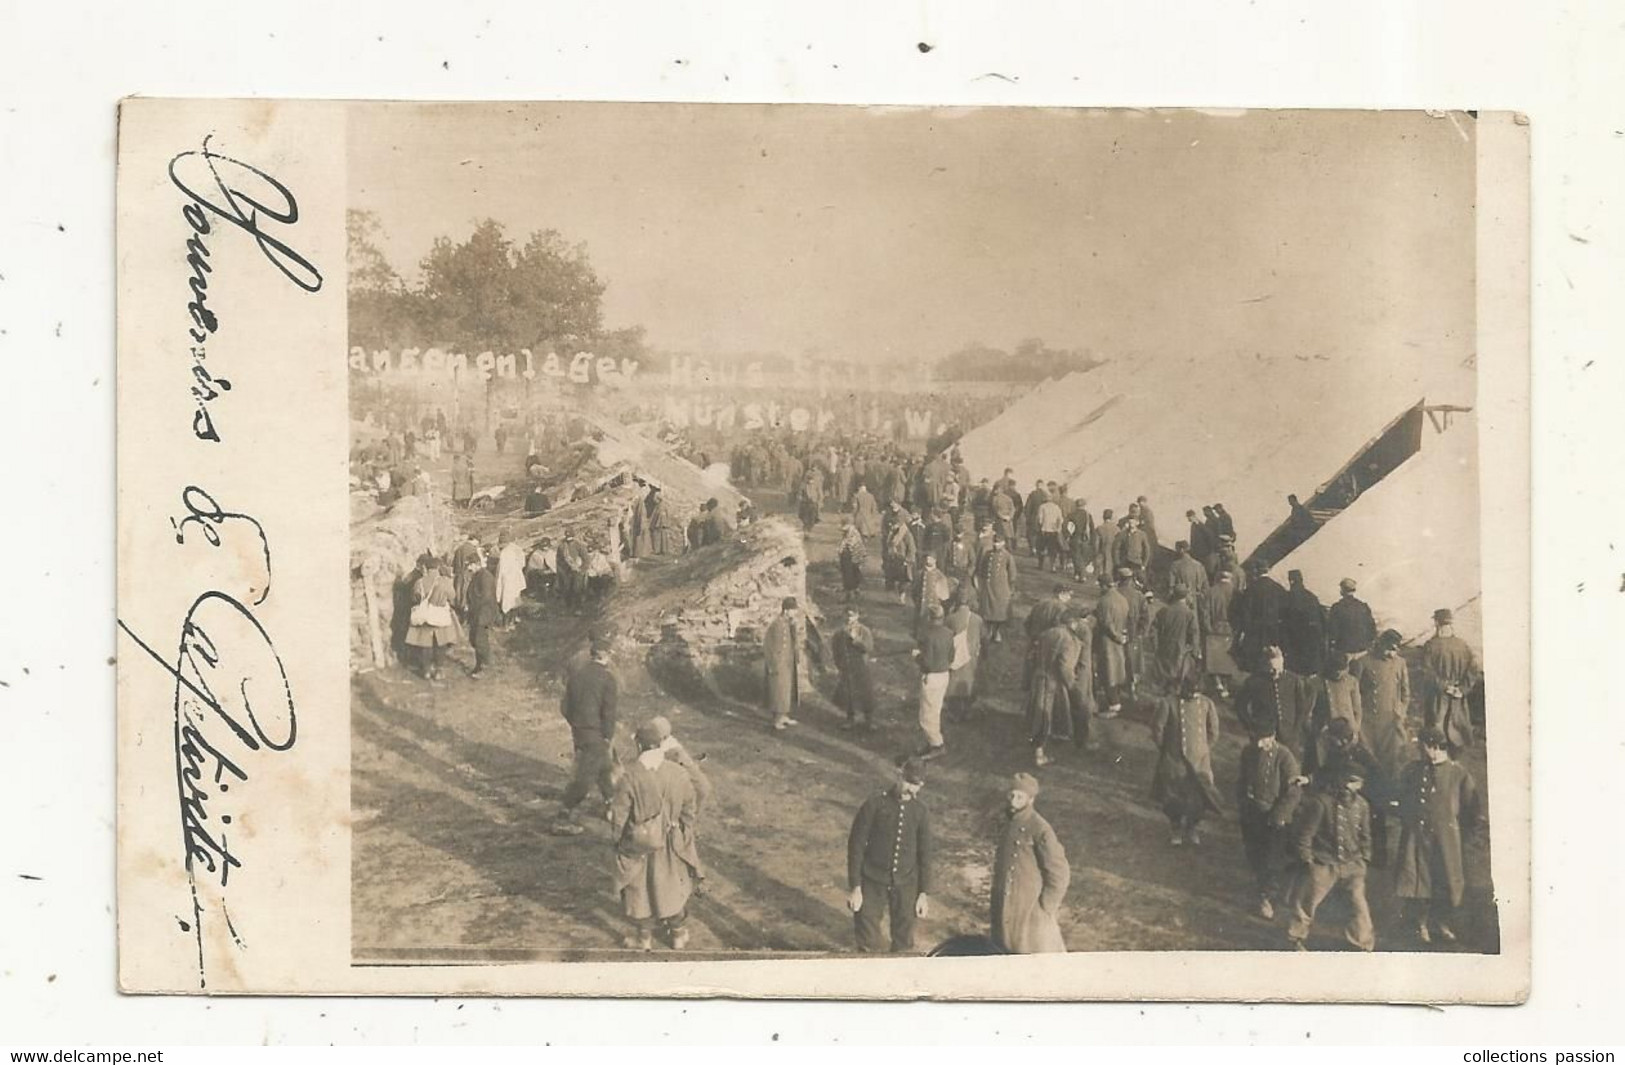 Cp , Carte Photo, Militaria, Camp De Prisonniers, Guerre 1914-18 , Camp I MÜNSTER, Rhénanie-Wesphalie - Personaggi